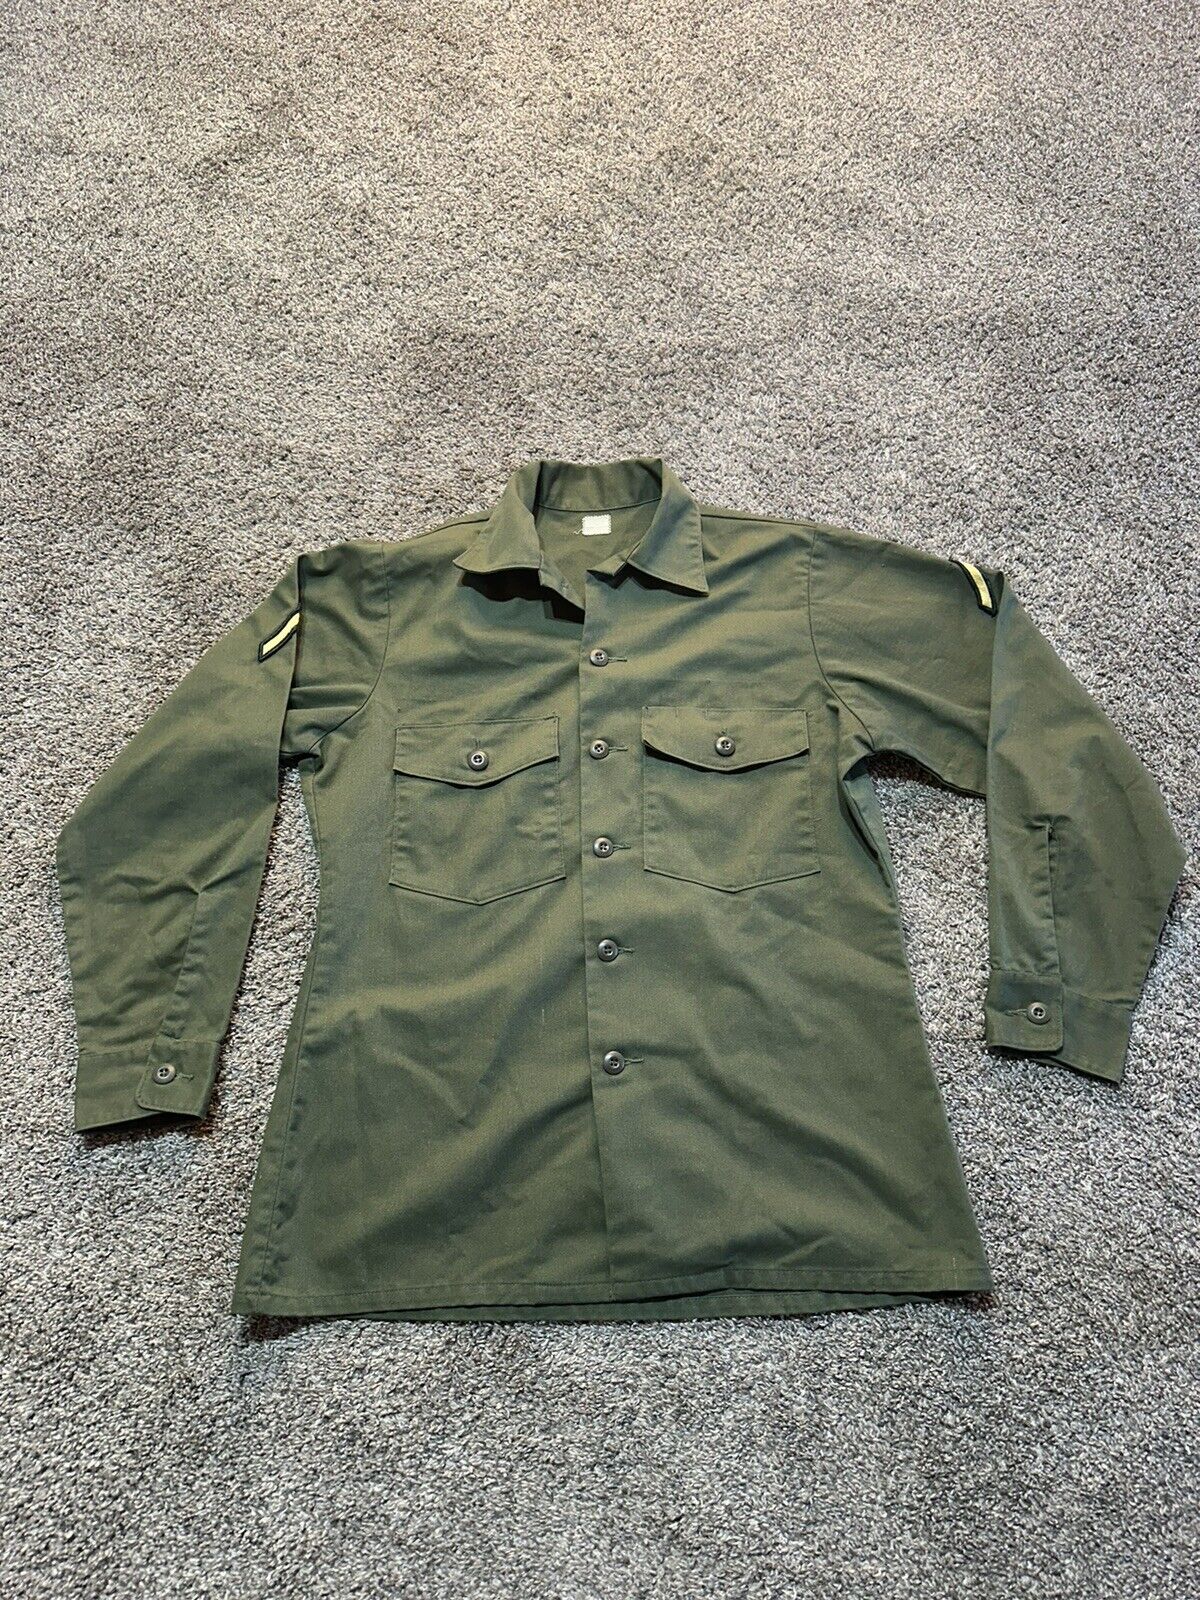 Vintage US Army OG507 Men’s Green Utility Field Shirt Size Large *Flaw* 8751